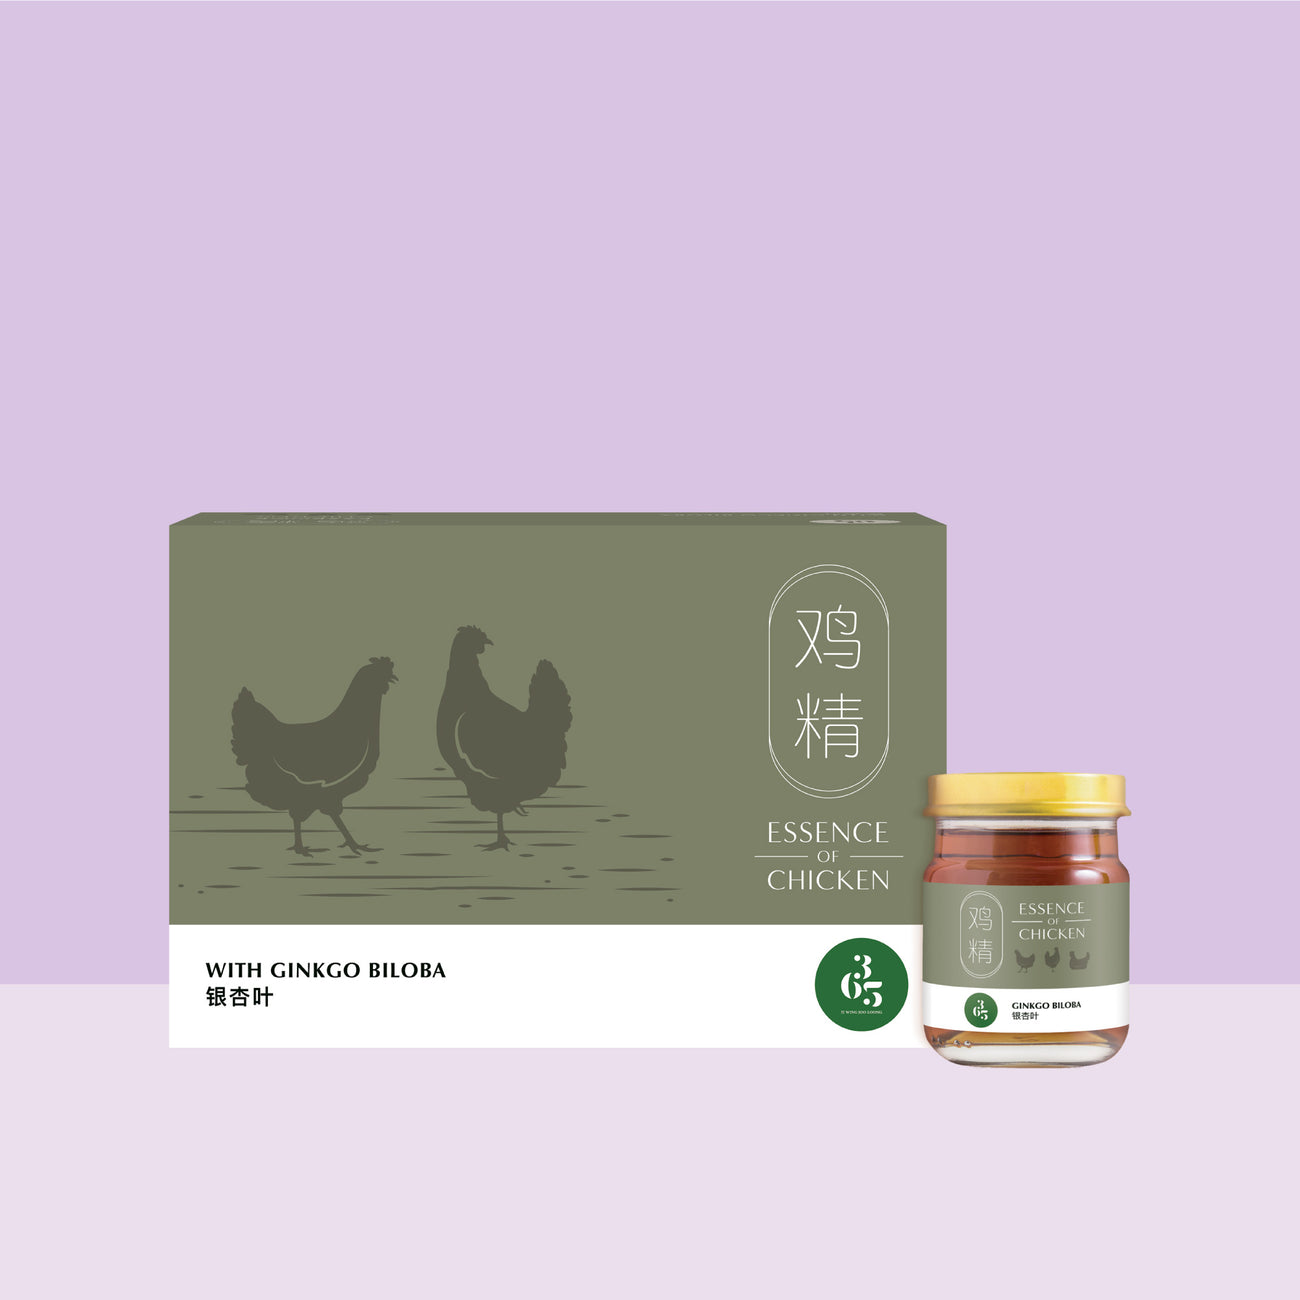 365 by Wing Joo Loong Ginkgo Biloba Essence of Chicken